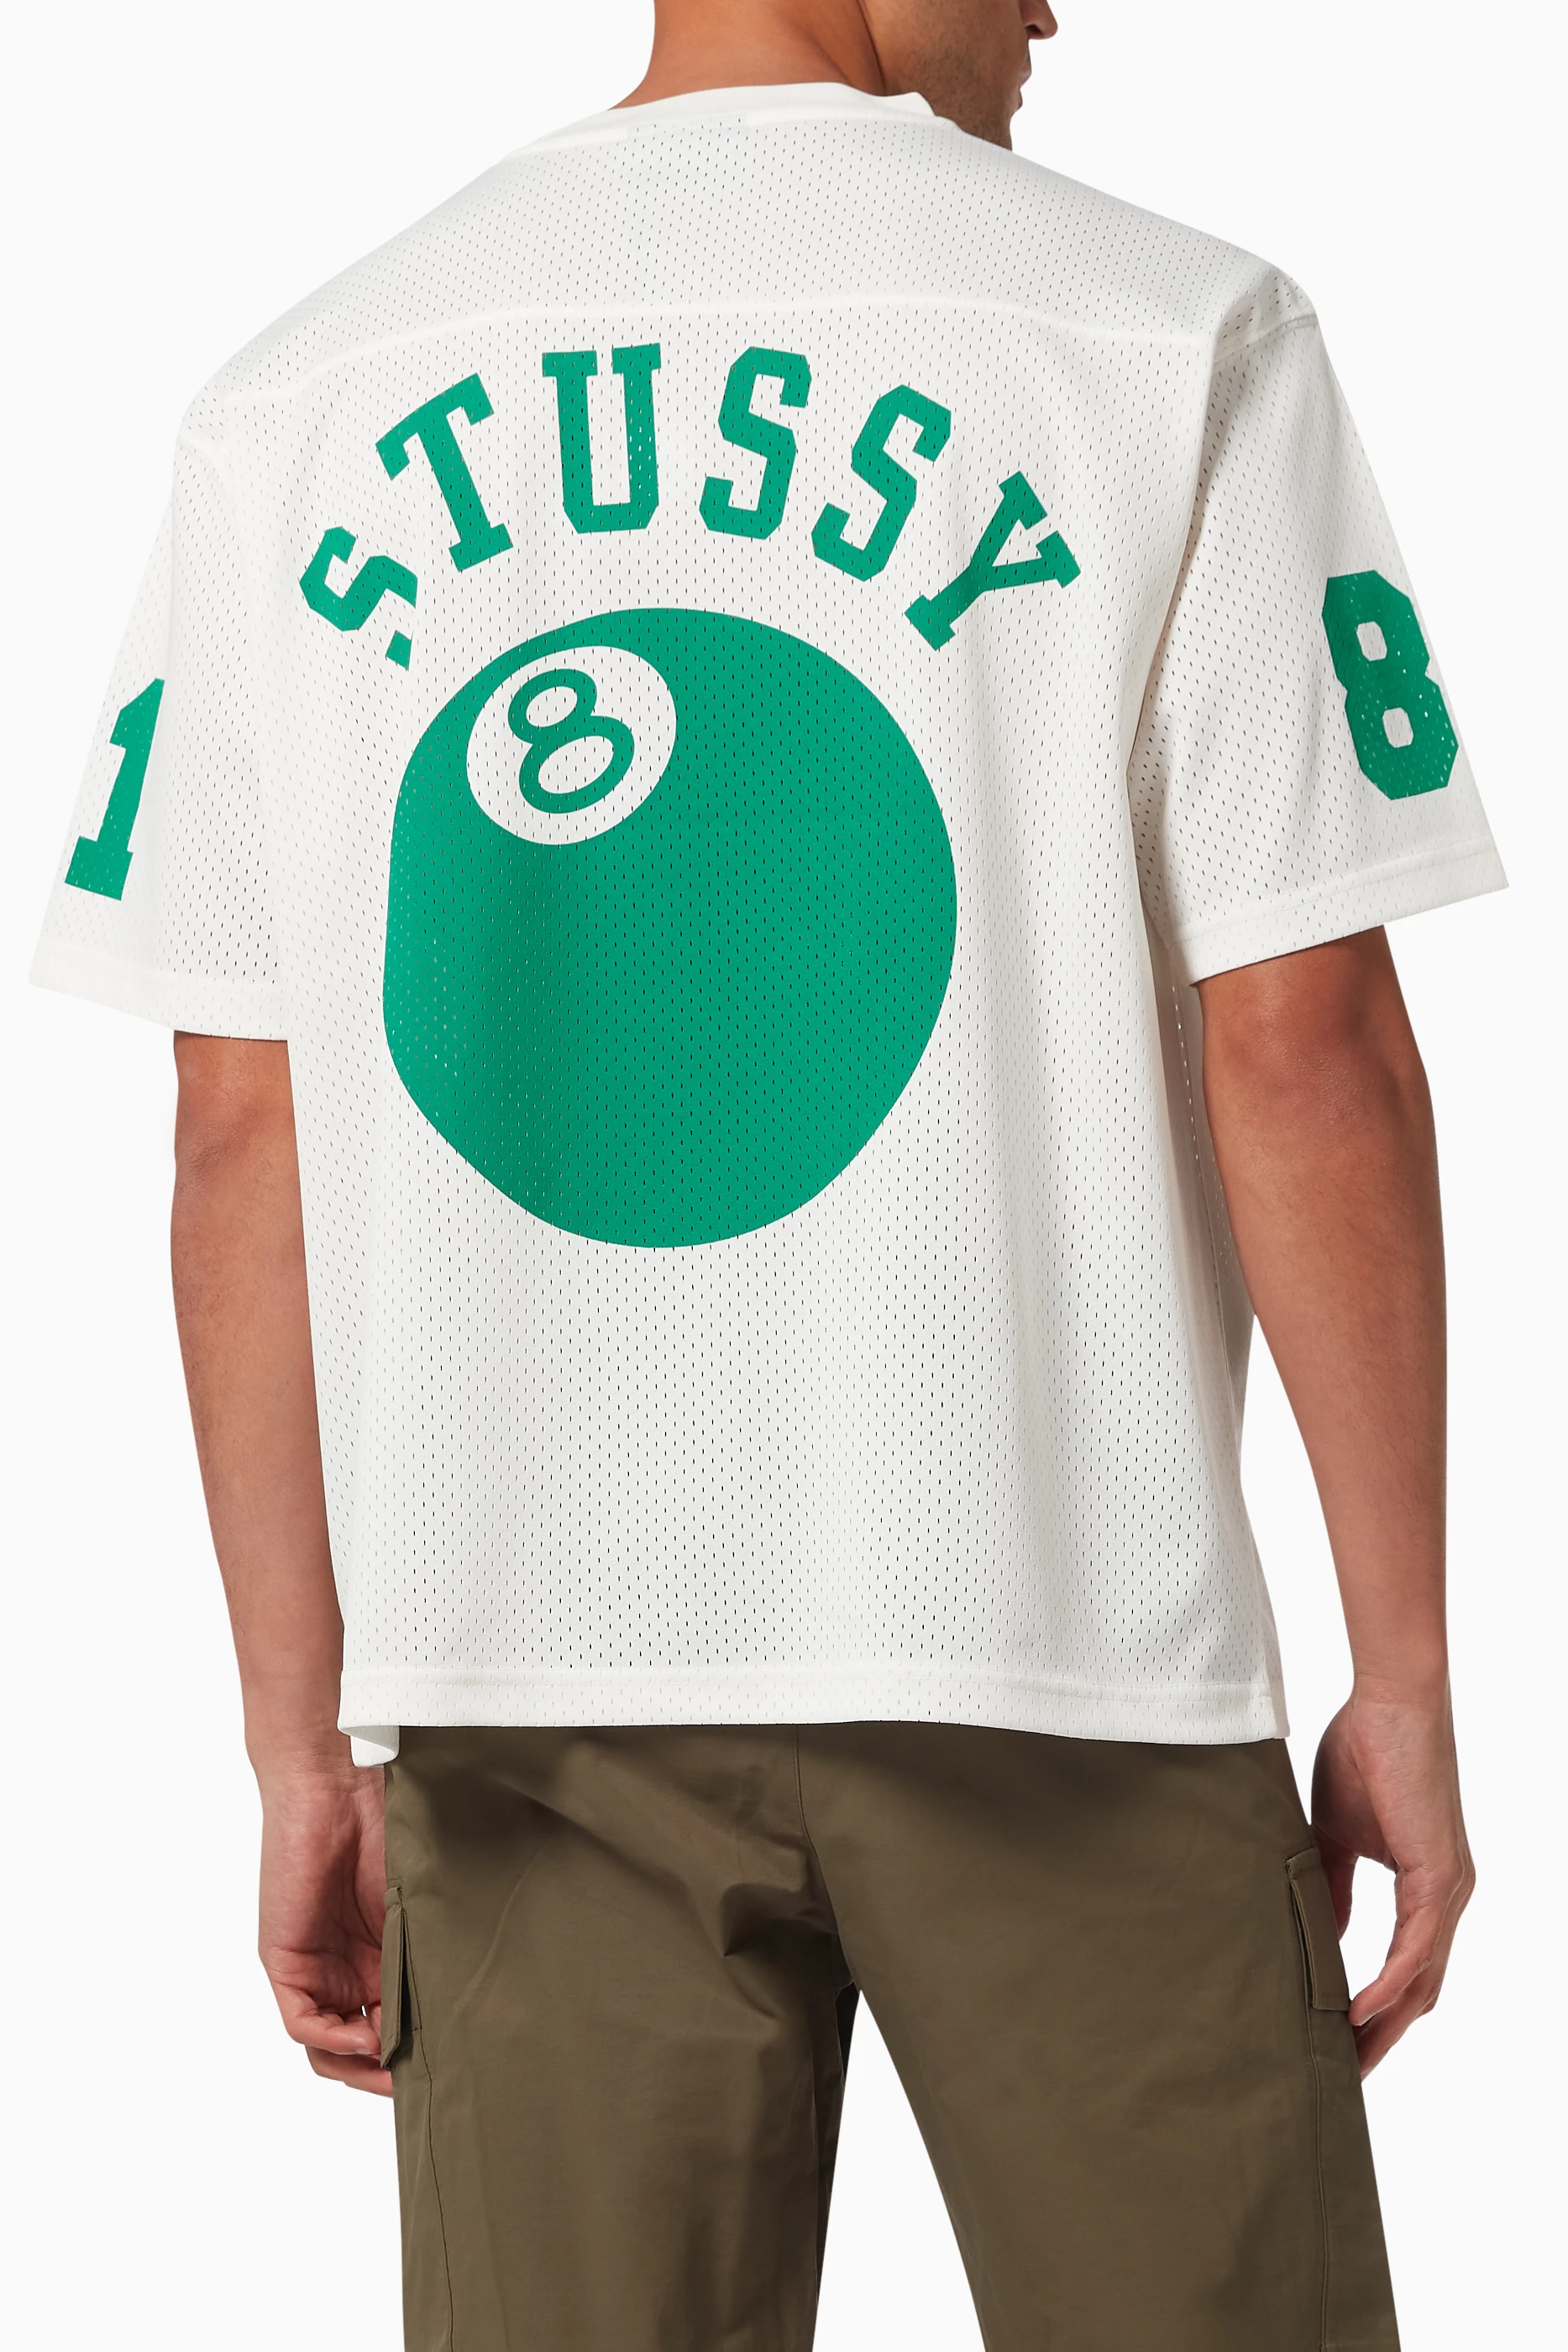 Stüssy - Men's Sport Mesh Football Jersey - (Green) – DSMNY E-SHOP